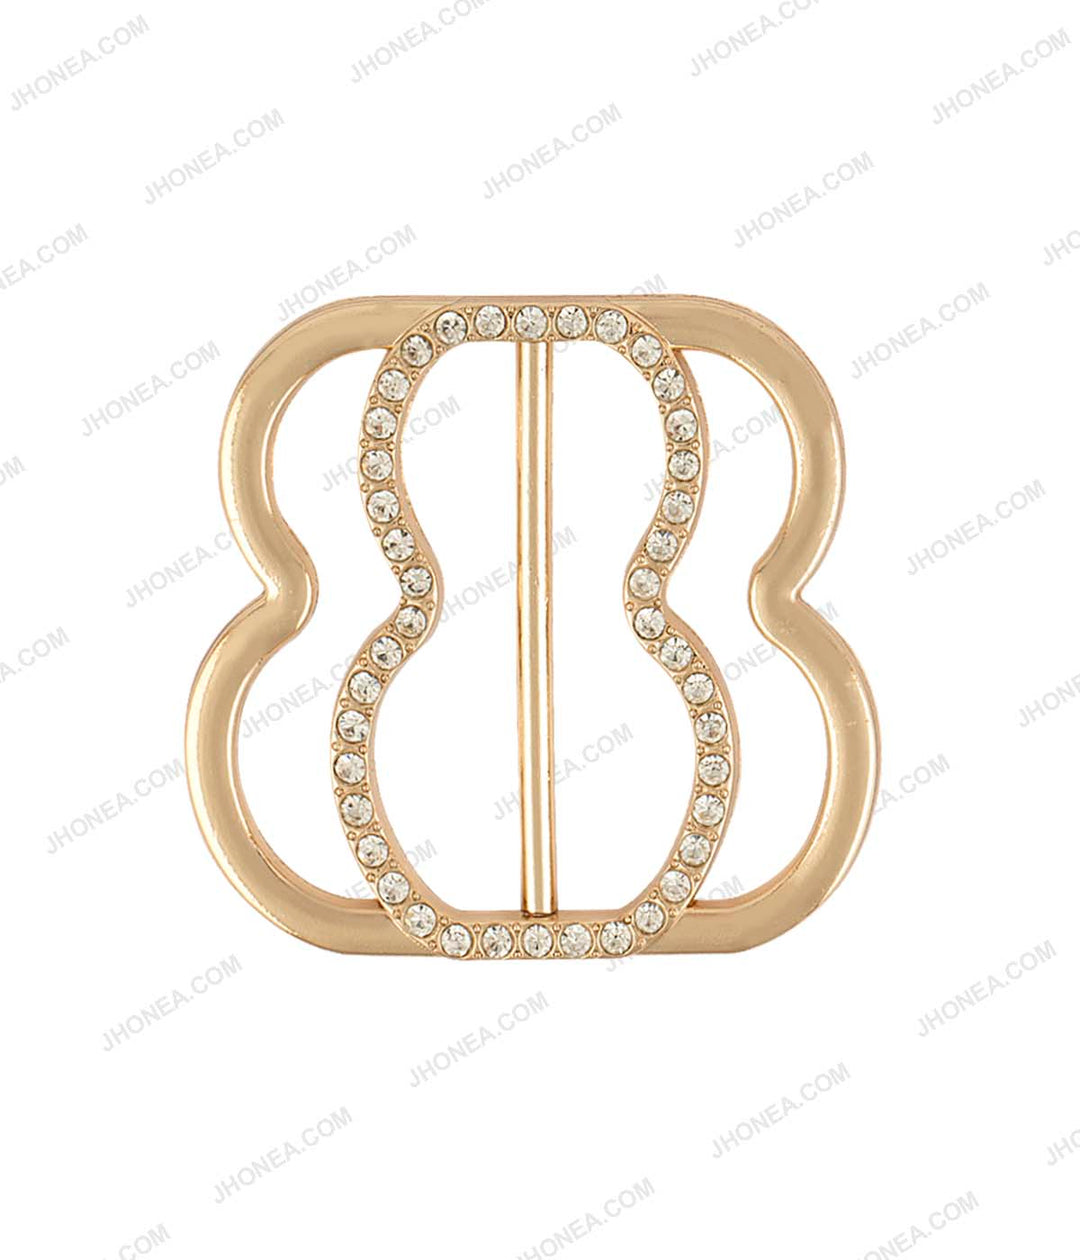 Sparkling Diamond Sliding Belt Buckle for Ladies in Shiny Gold Color